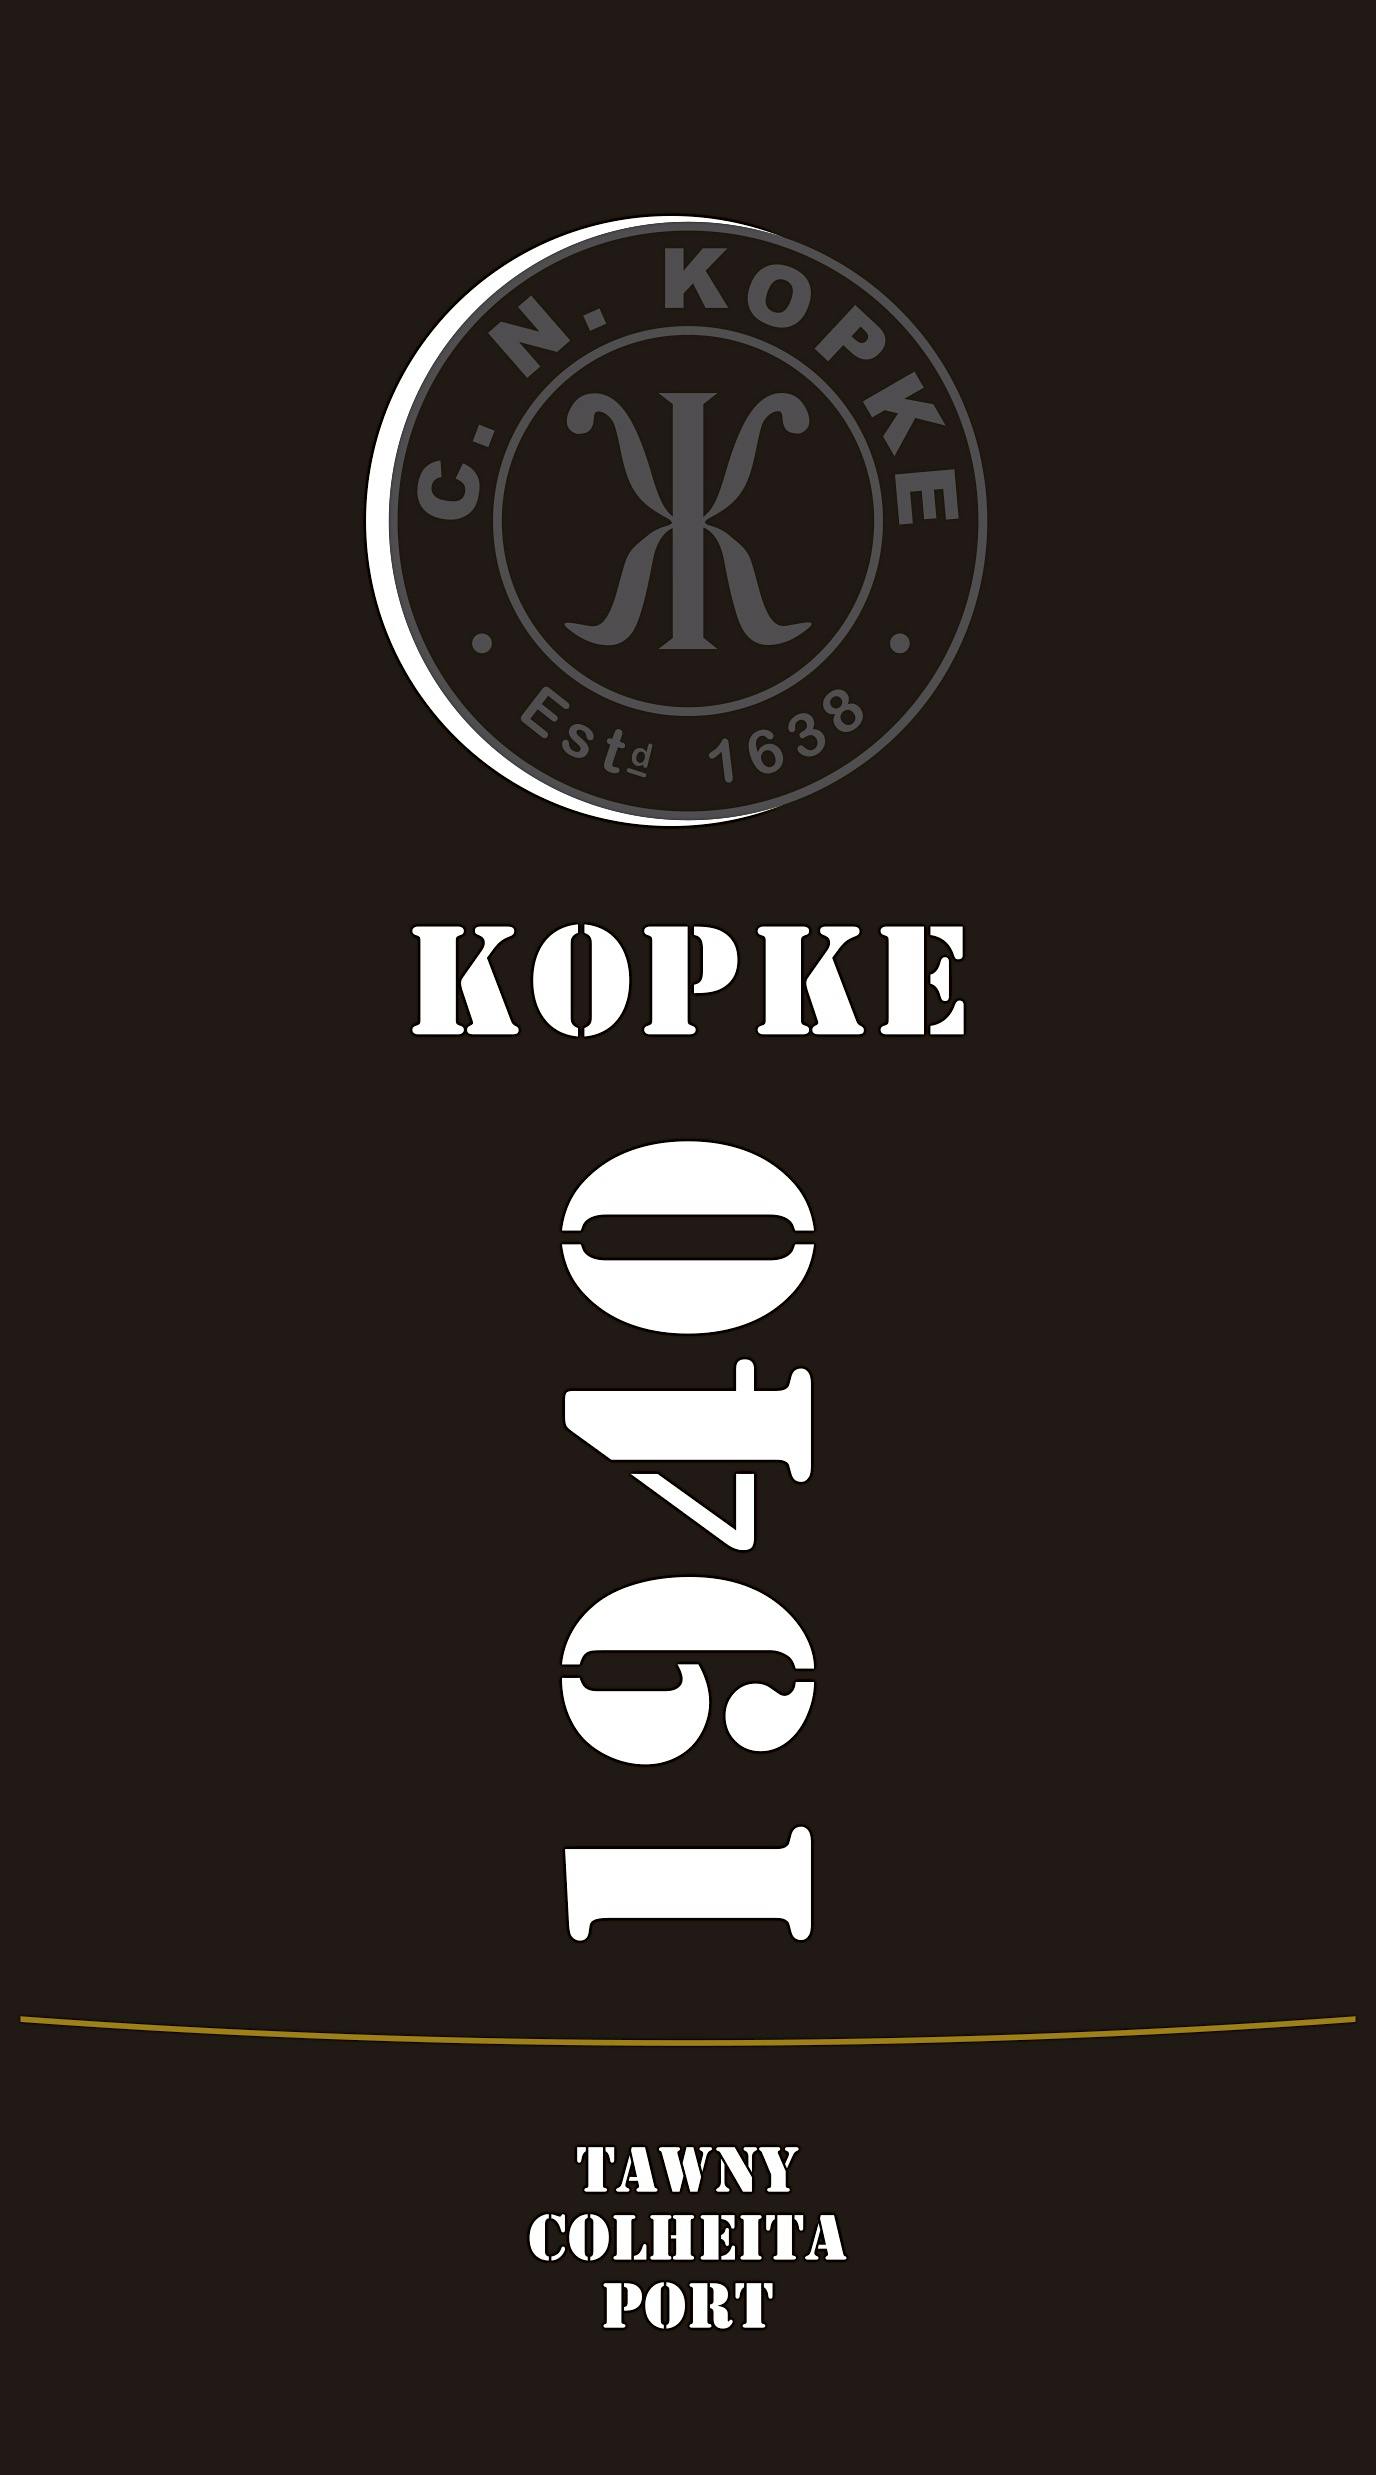 Label for Kopke